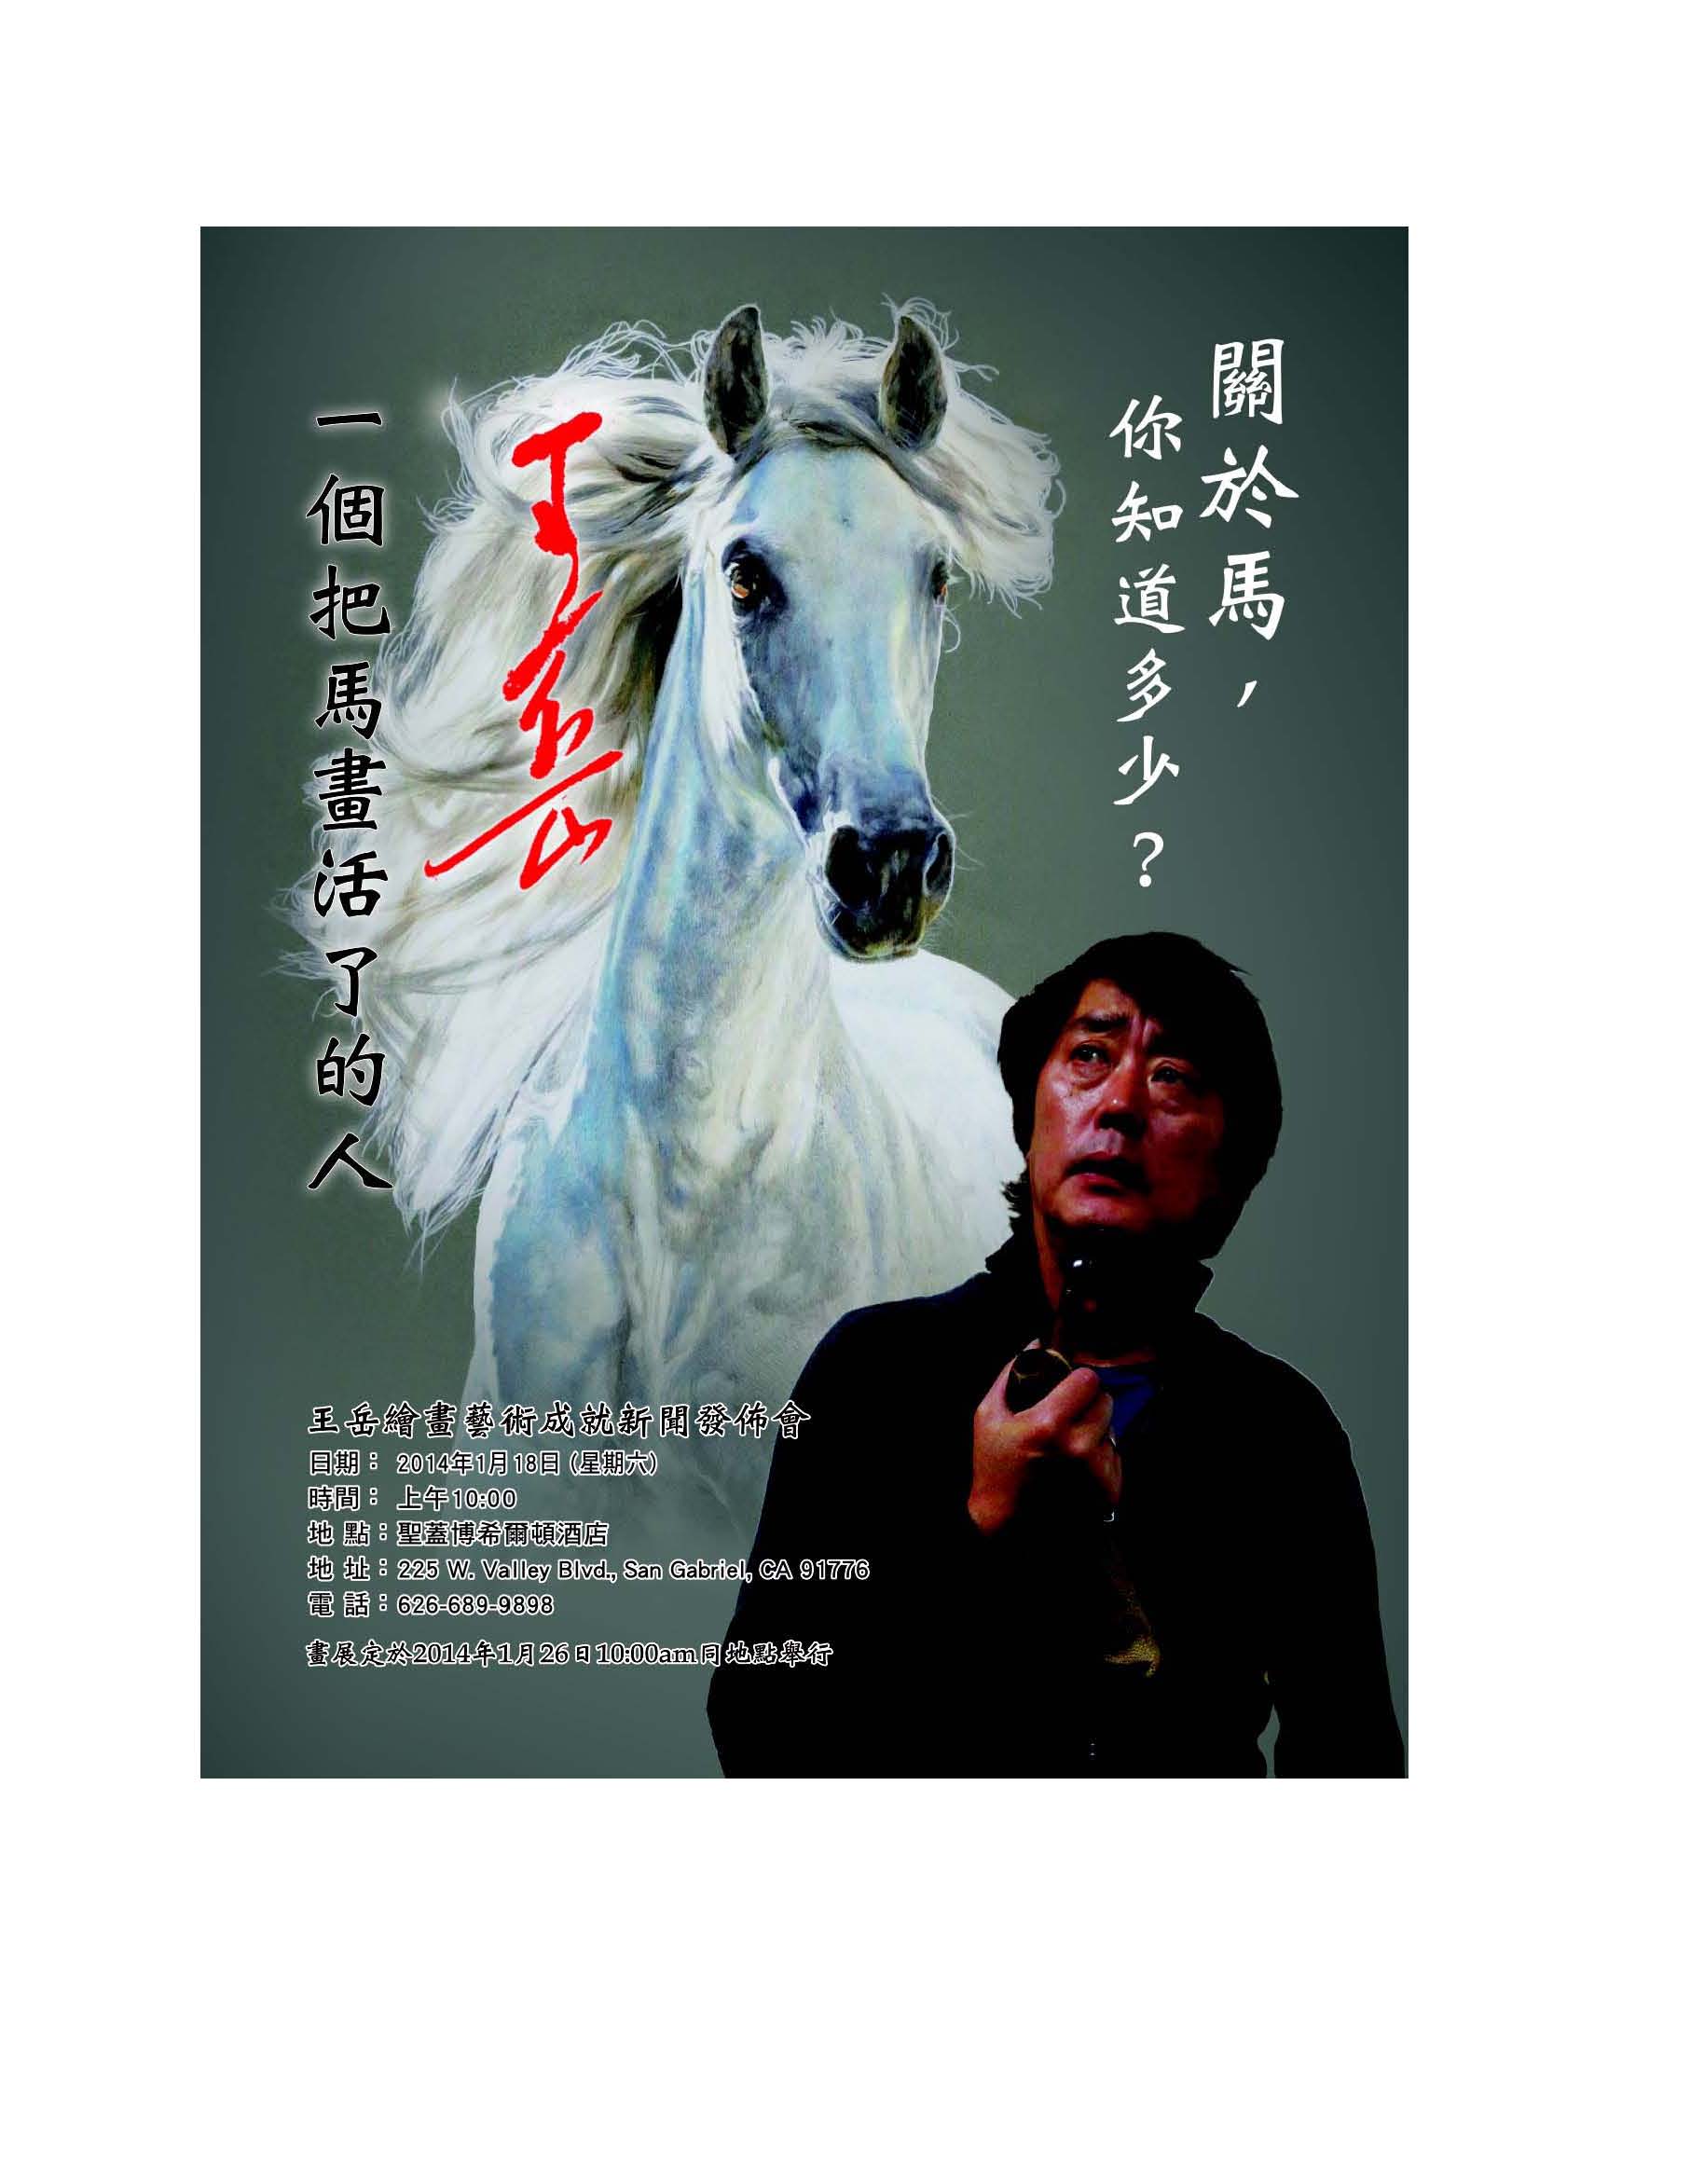 Wang Yue - Horse Poster_Page_1.jpg